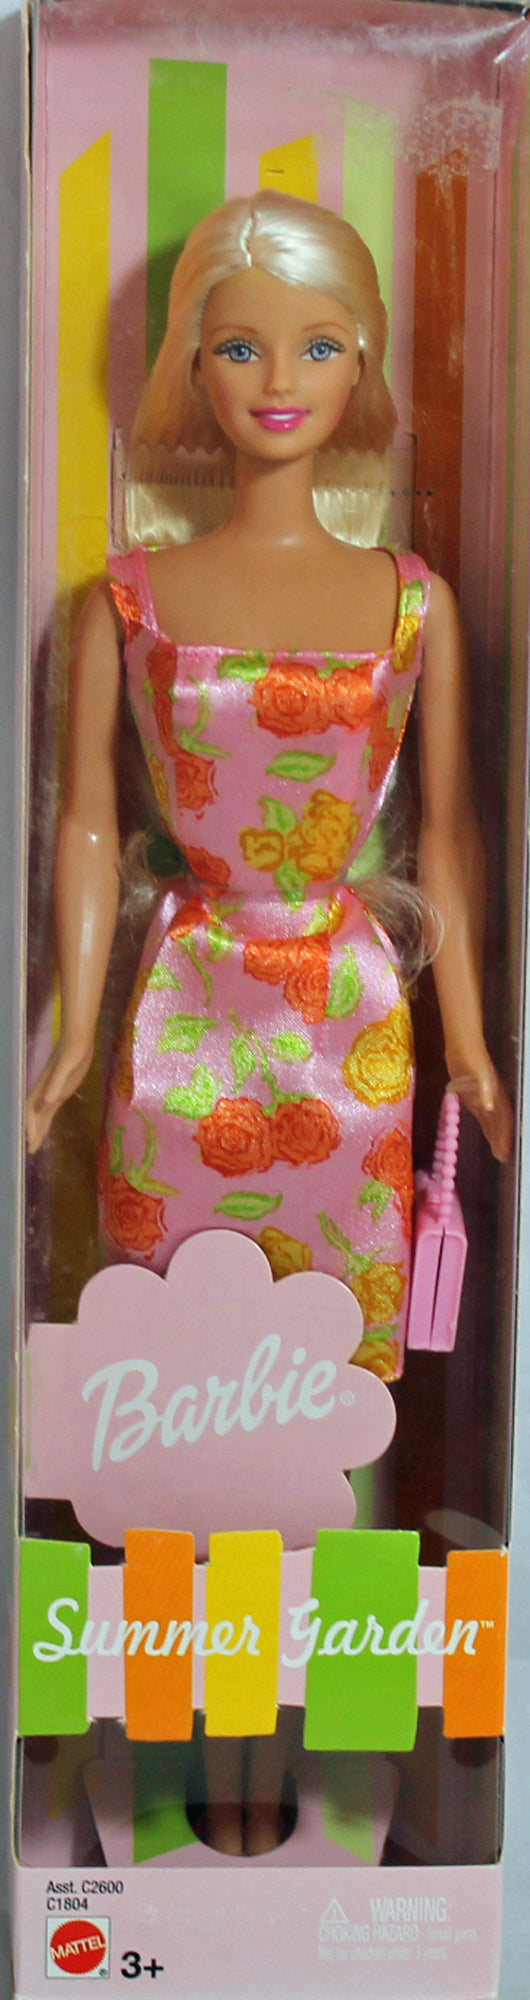 2002 Summer Garden Barbie (C1804)